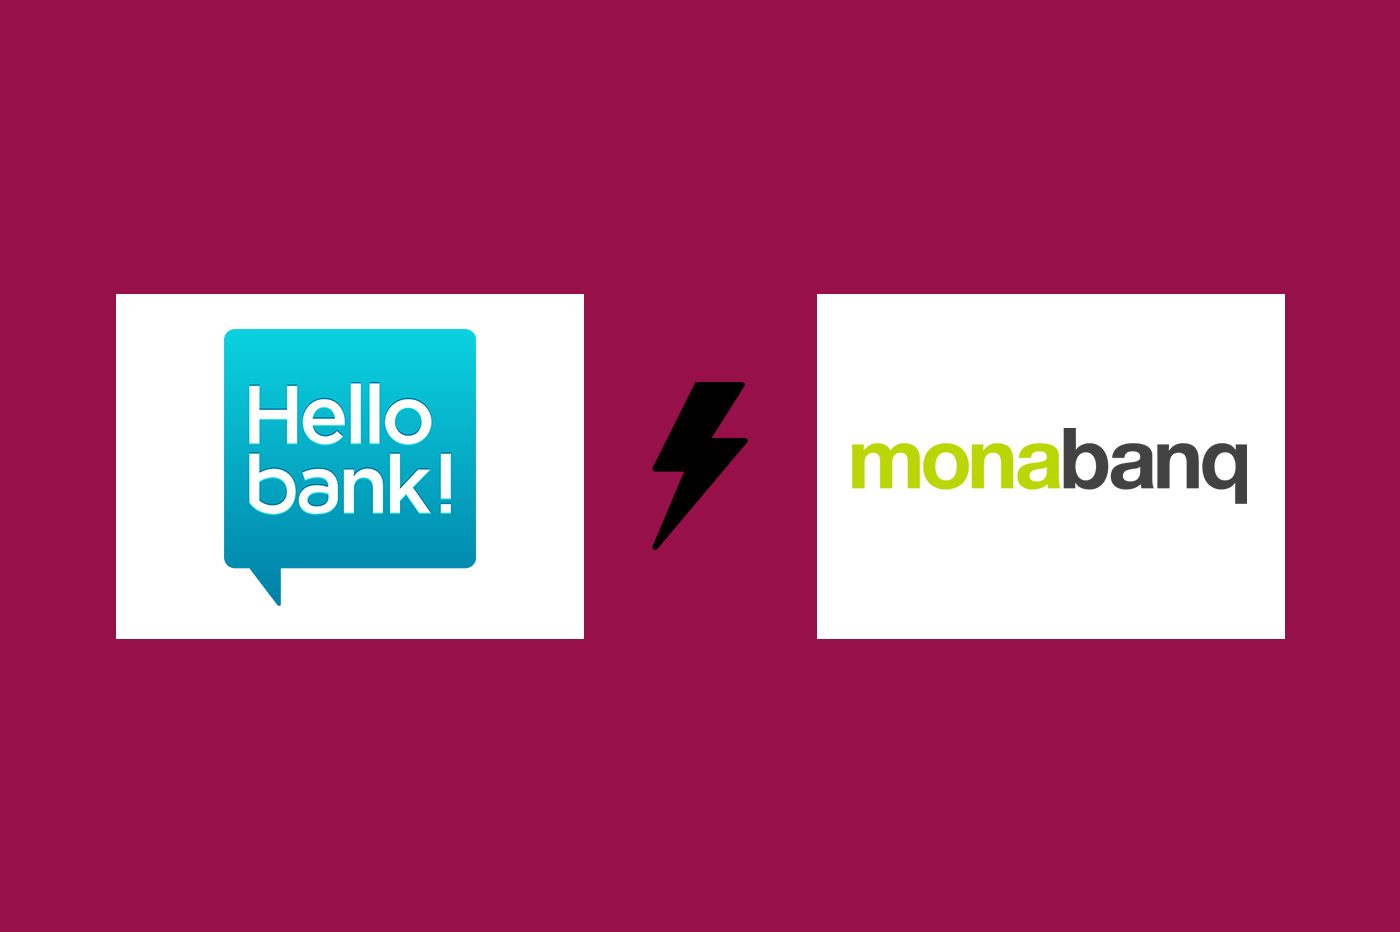 Hello bank! vs Monabanq